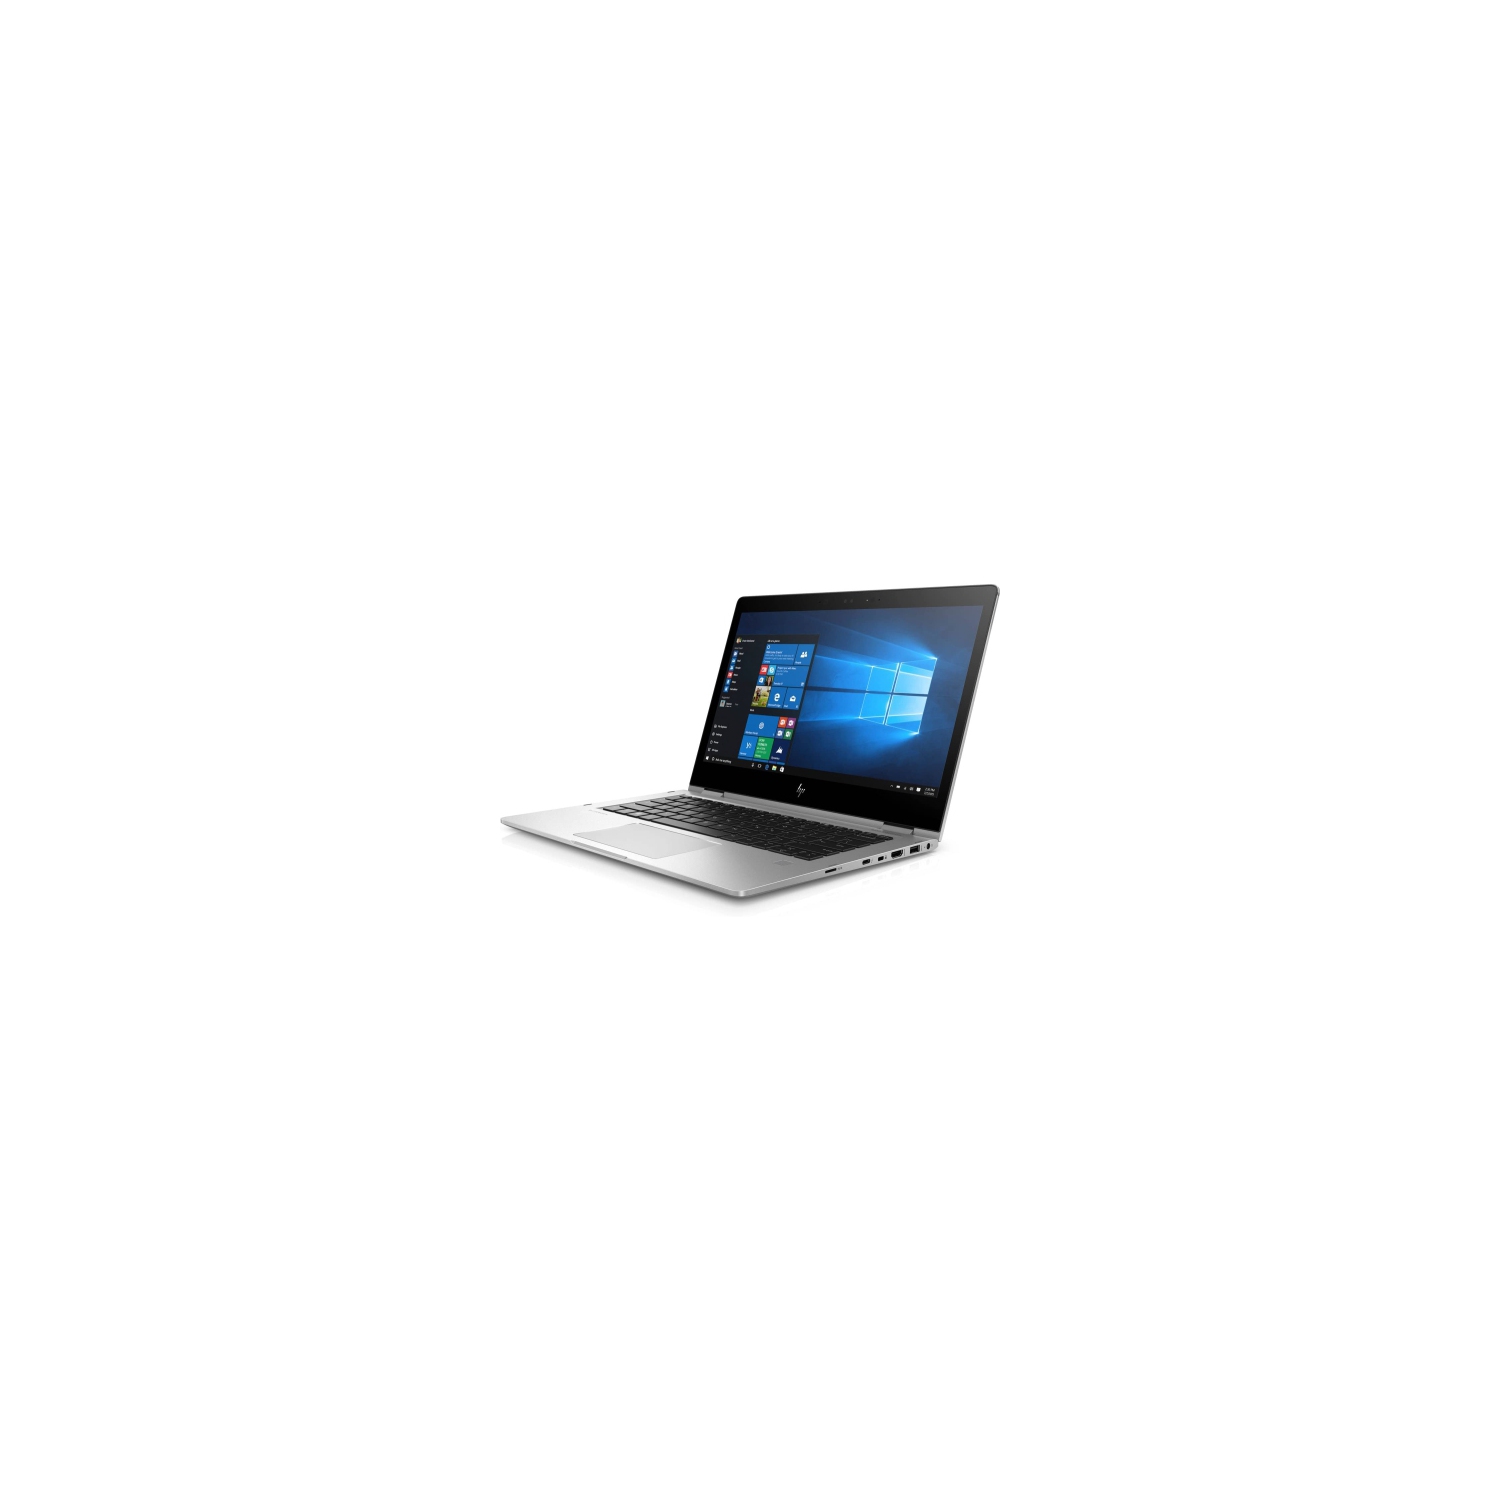 Refurbished (Good) - HP EliteBook x360 1030 G2 - 13.3" Touchscreen Laptop - Core i7 7600U - 16 GB RAM - 512 GB SSD - Windows 10 Pro(Grade A)